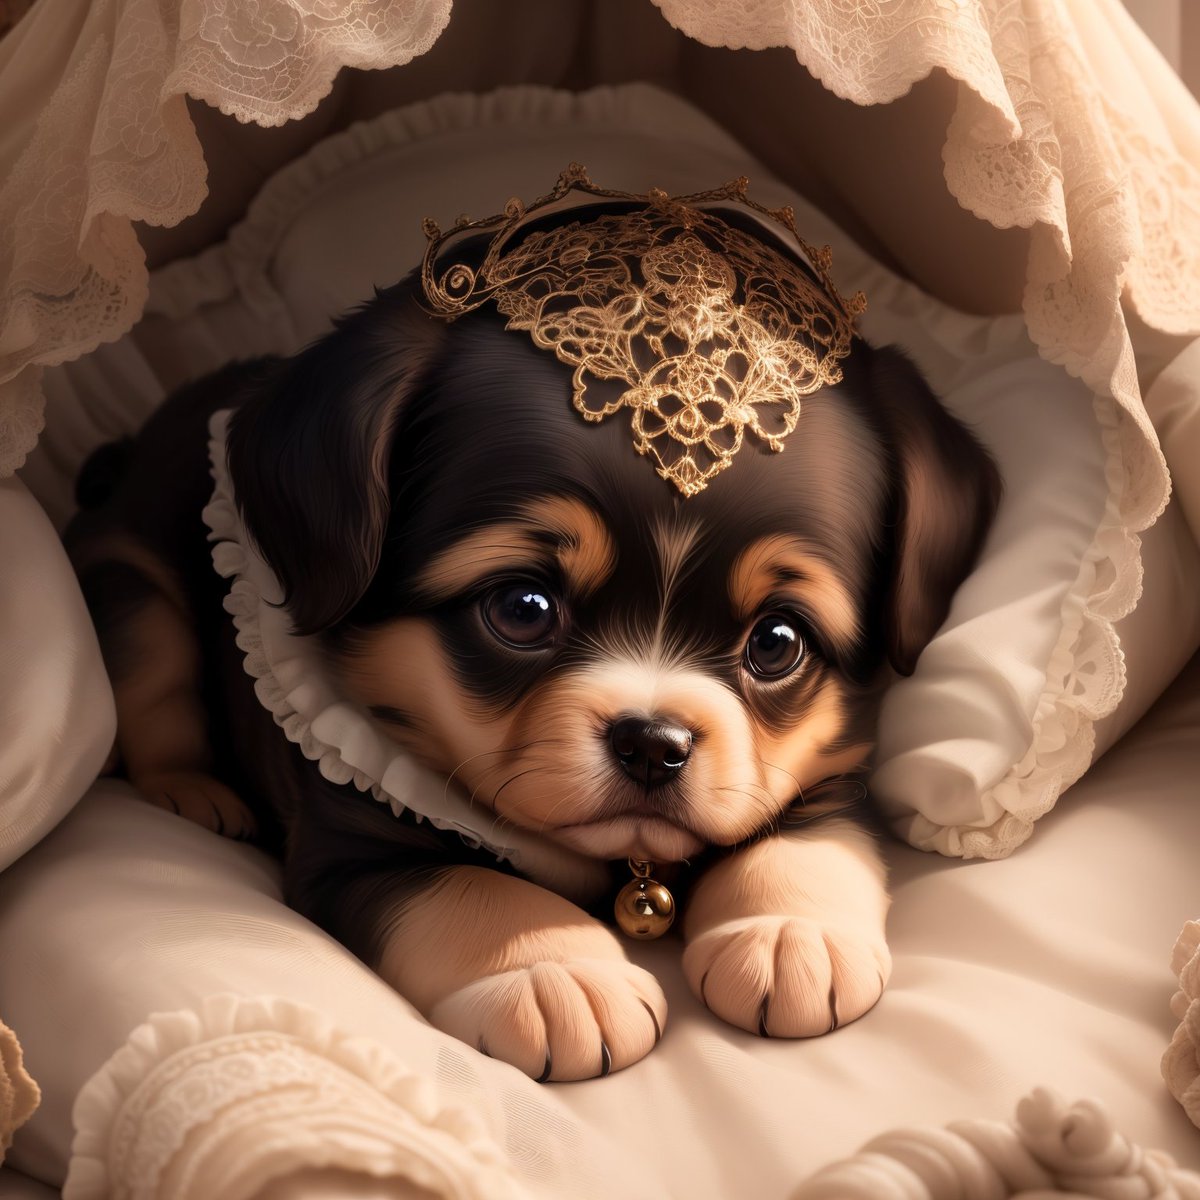 #cute #cuteanimals #princesspuppy #dogsoftwitter  #aiart #adorable #adorablepuppy #conceptart